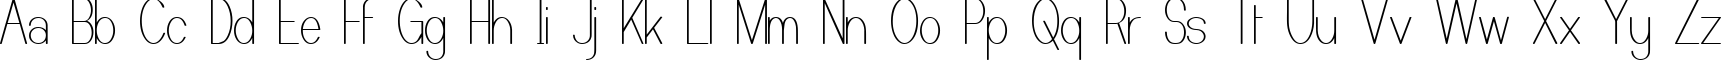 Пример написания английского алфавита шрифтом Castorgate - Upright